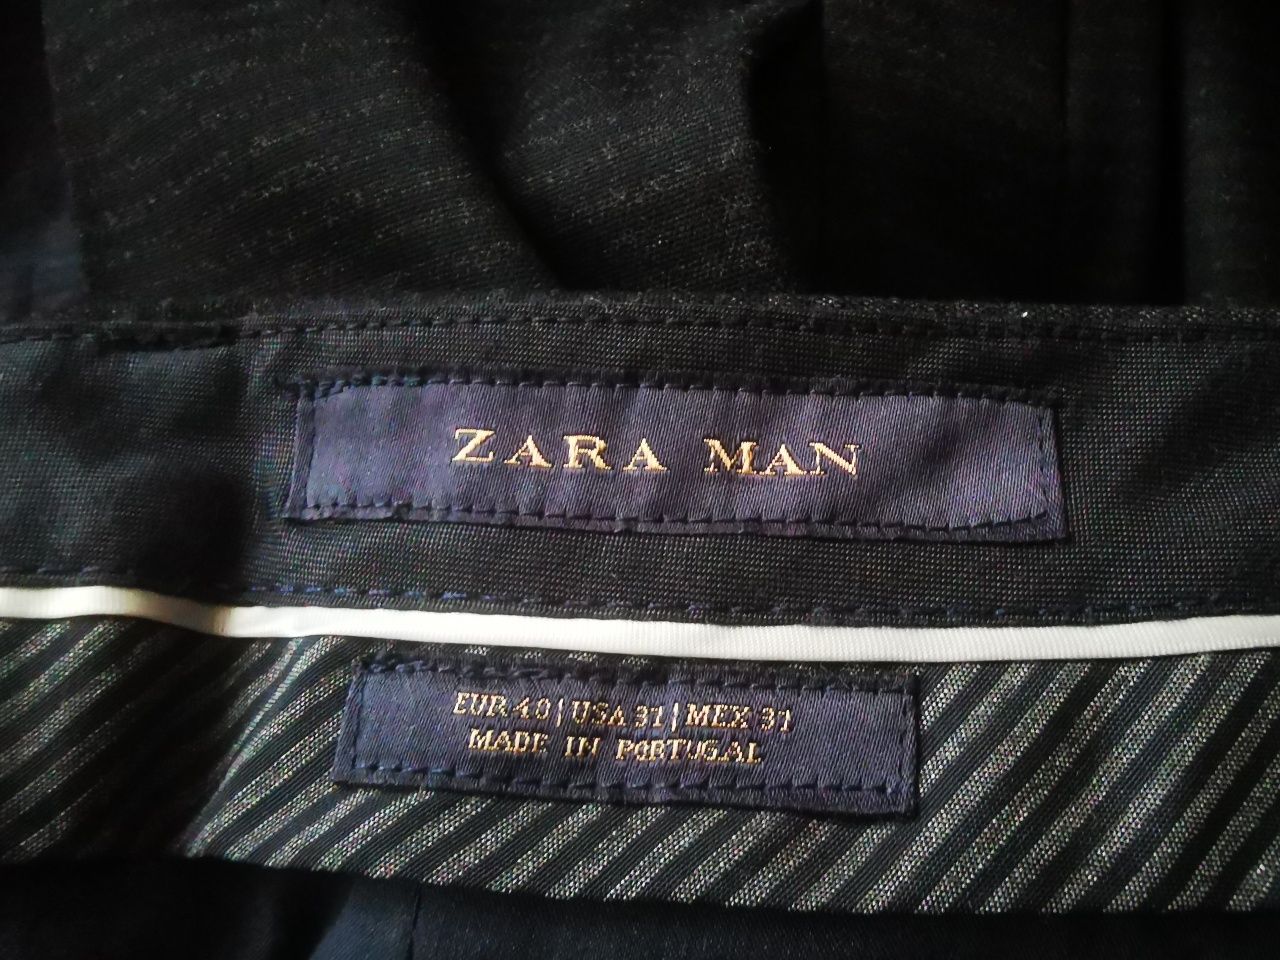 Costum Zara man.